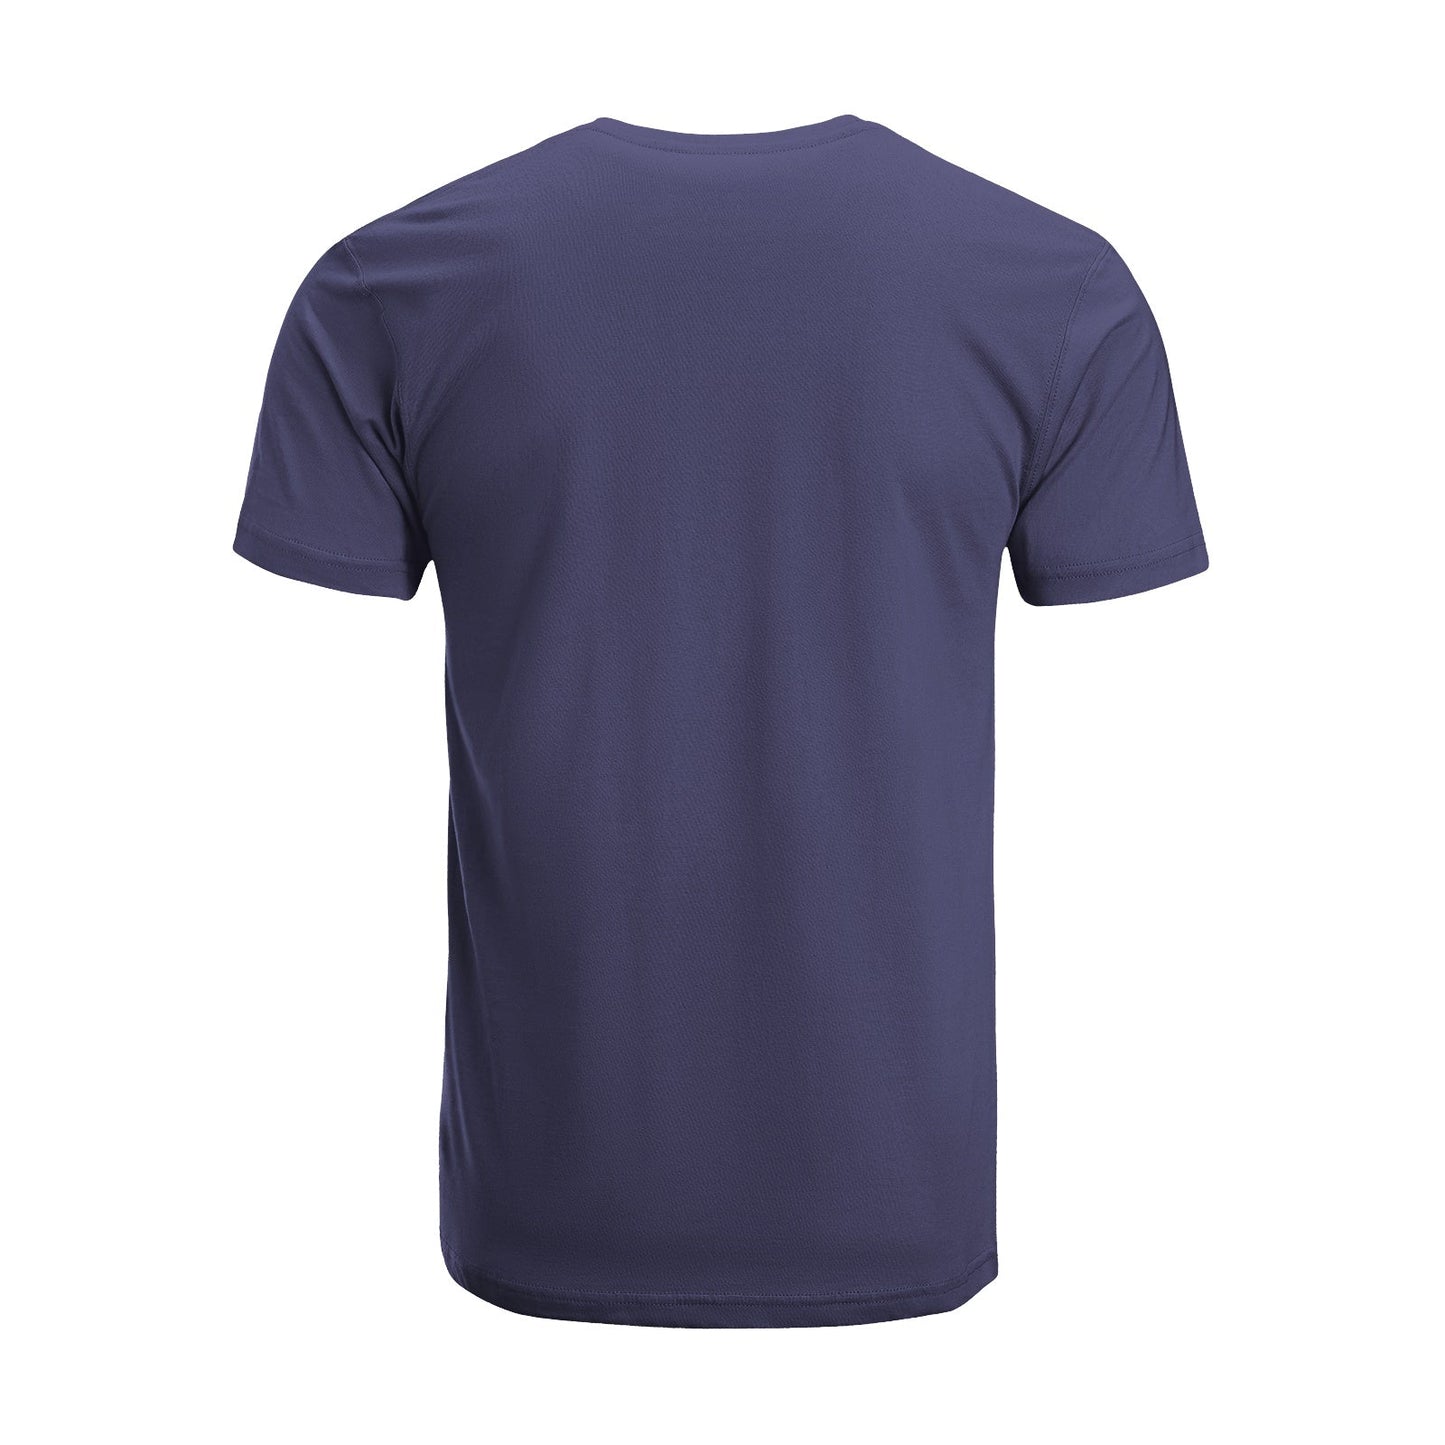 Unisex Short Sleeve Crew Neck Cotton Jersey T-Shirt Gym No. 33 - Tara-Outfits.com